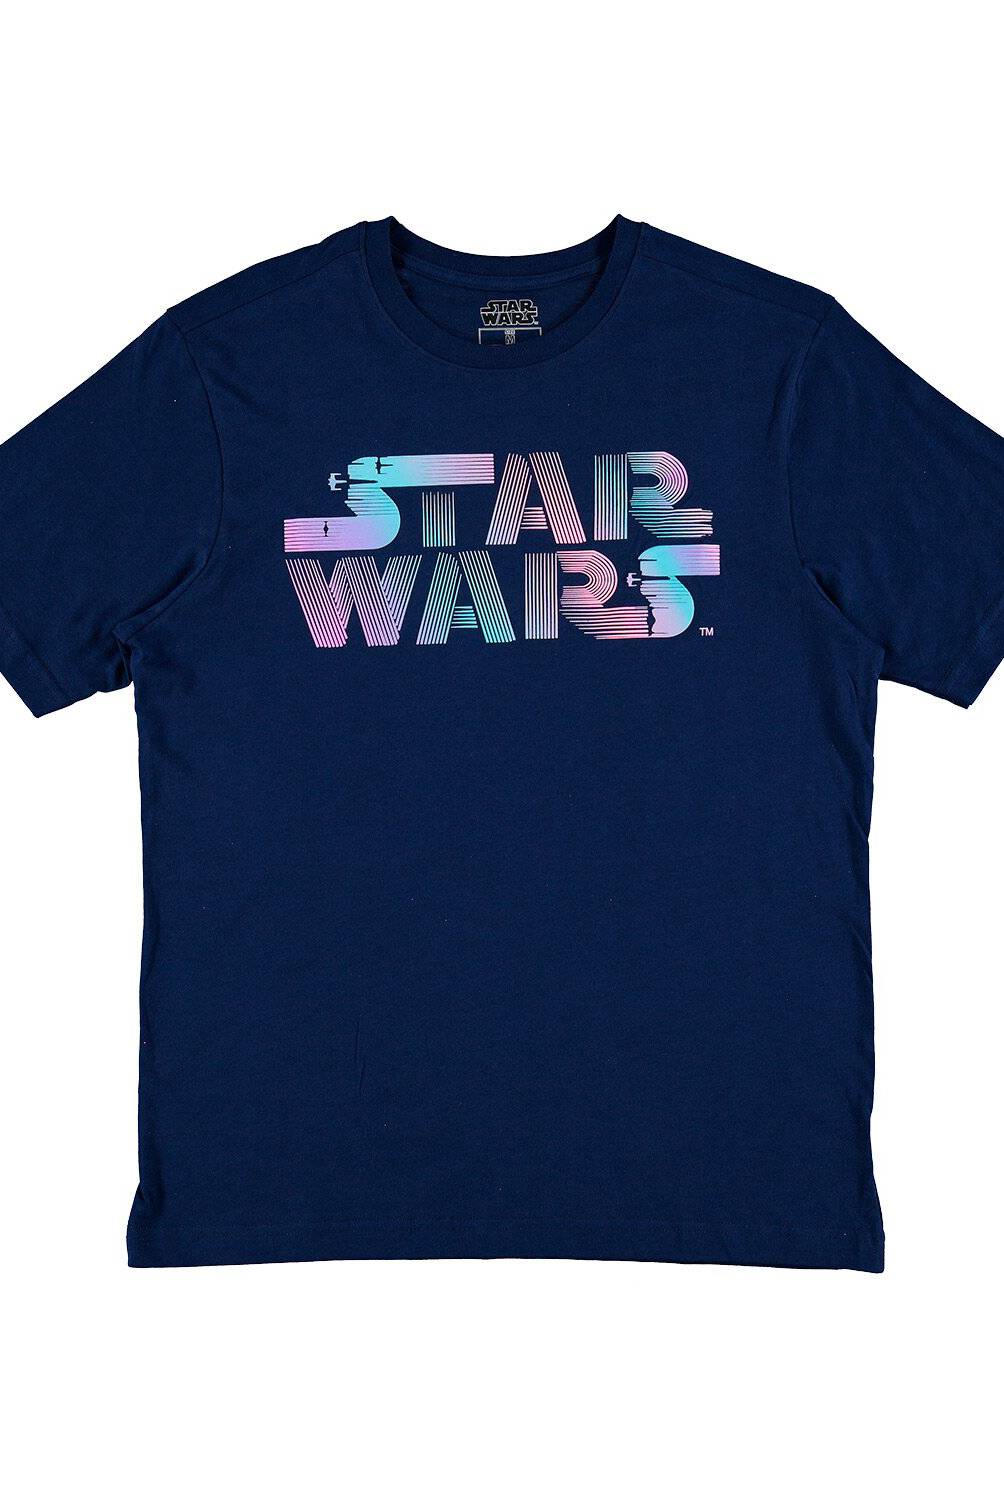 Star Wars - Camiseta Hombre Manga Corta Star wars